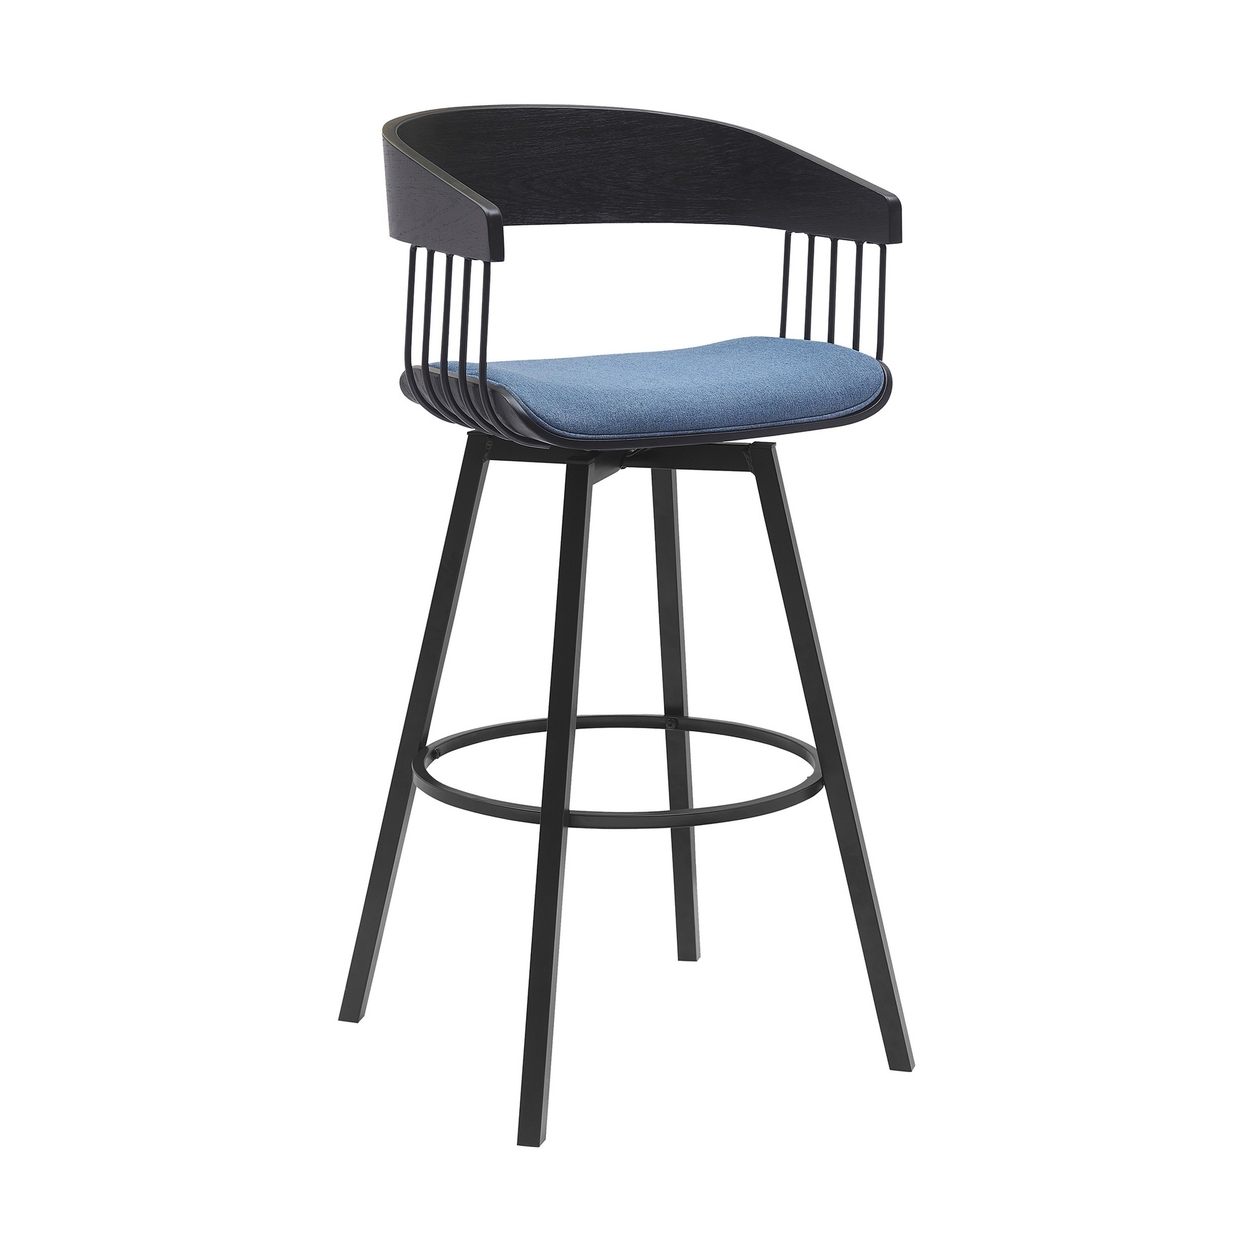 Vera 31 Inch Swivel Barstool Chair, Curved Back, Black, Light Blue Fabric - Saltoro Sherpi